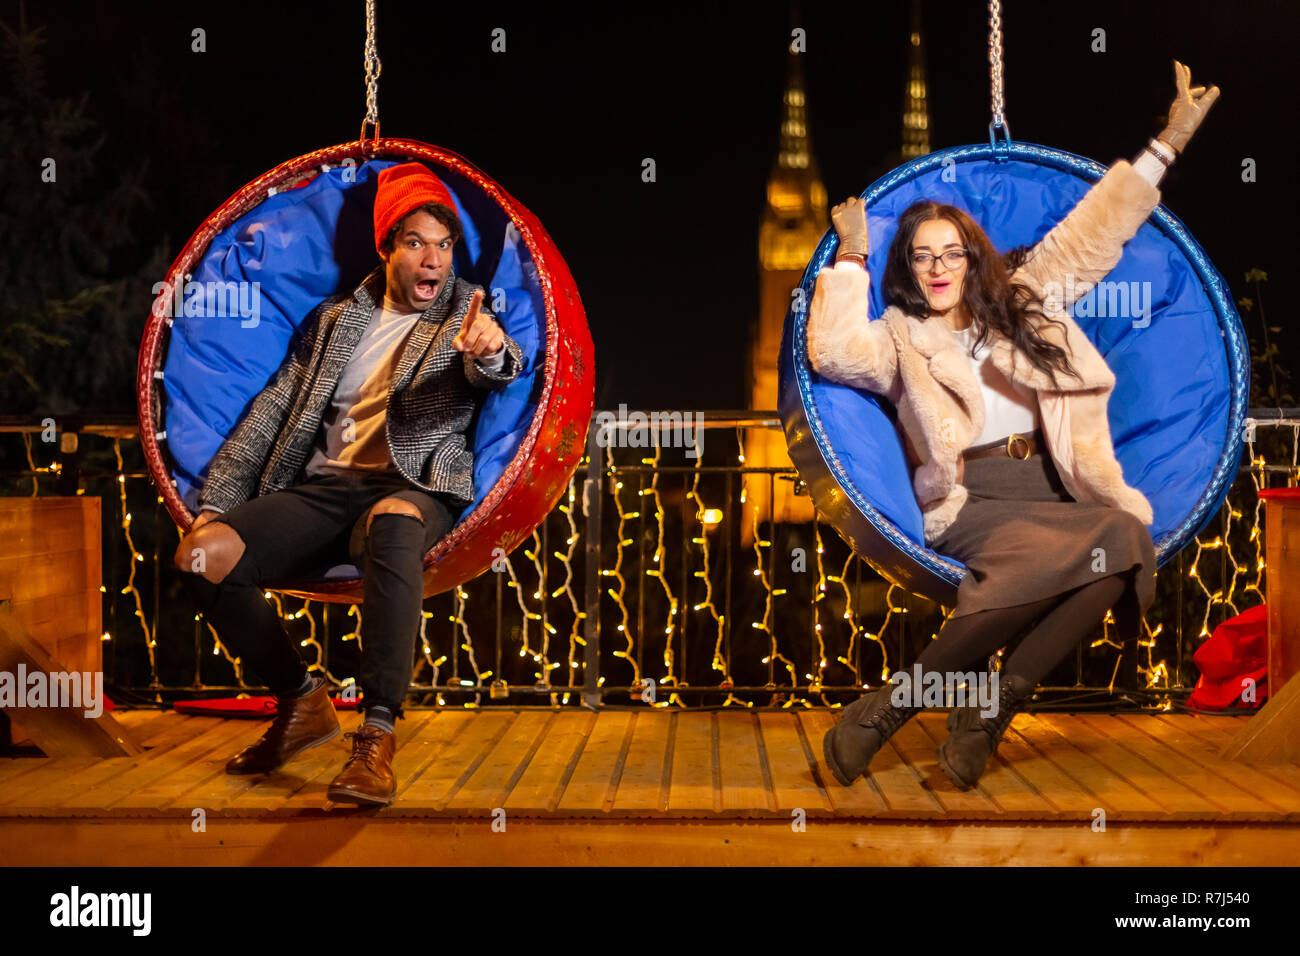 Couple having fun on hanging Christmas chairs, Zagreb, Croatia. Stock Photo